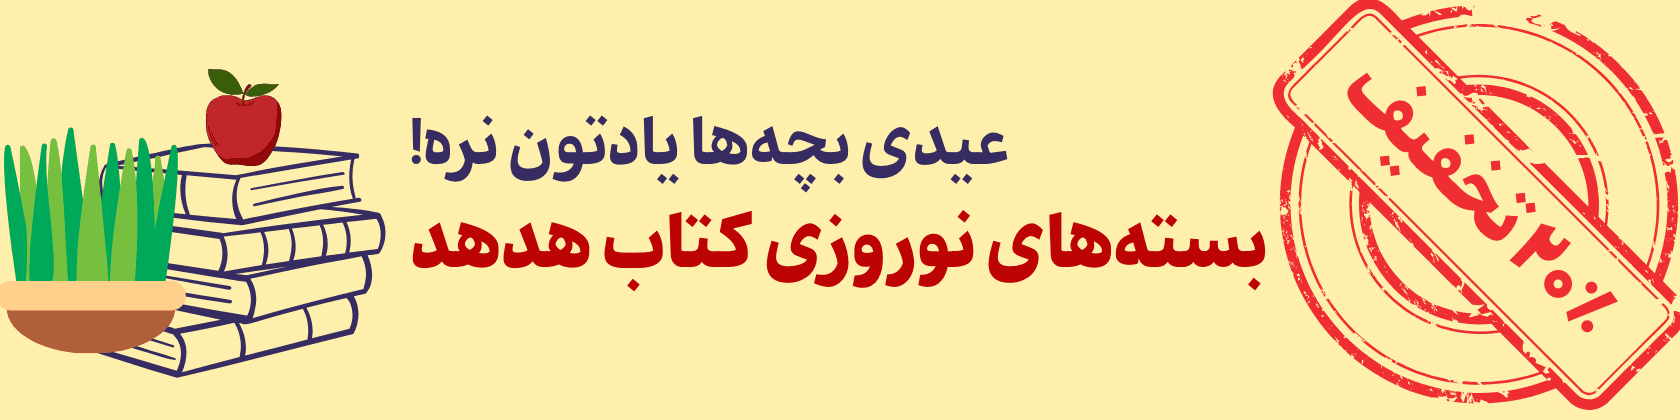 banner 1 کتاب هدهد - خرید آنلاین کتاب کودک و نوجوان، ارسال به سراسر ایران